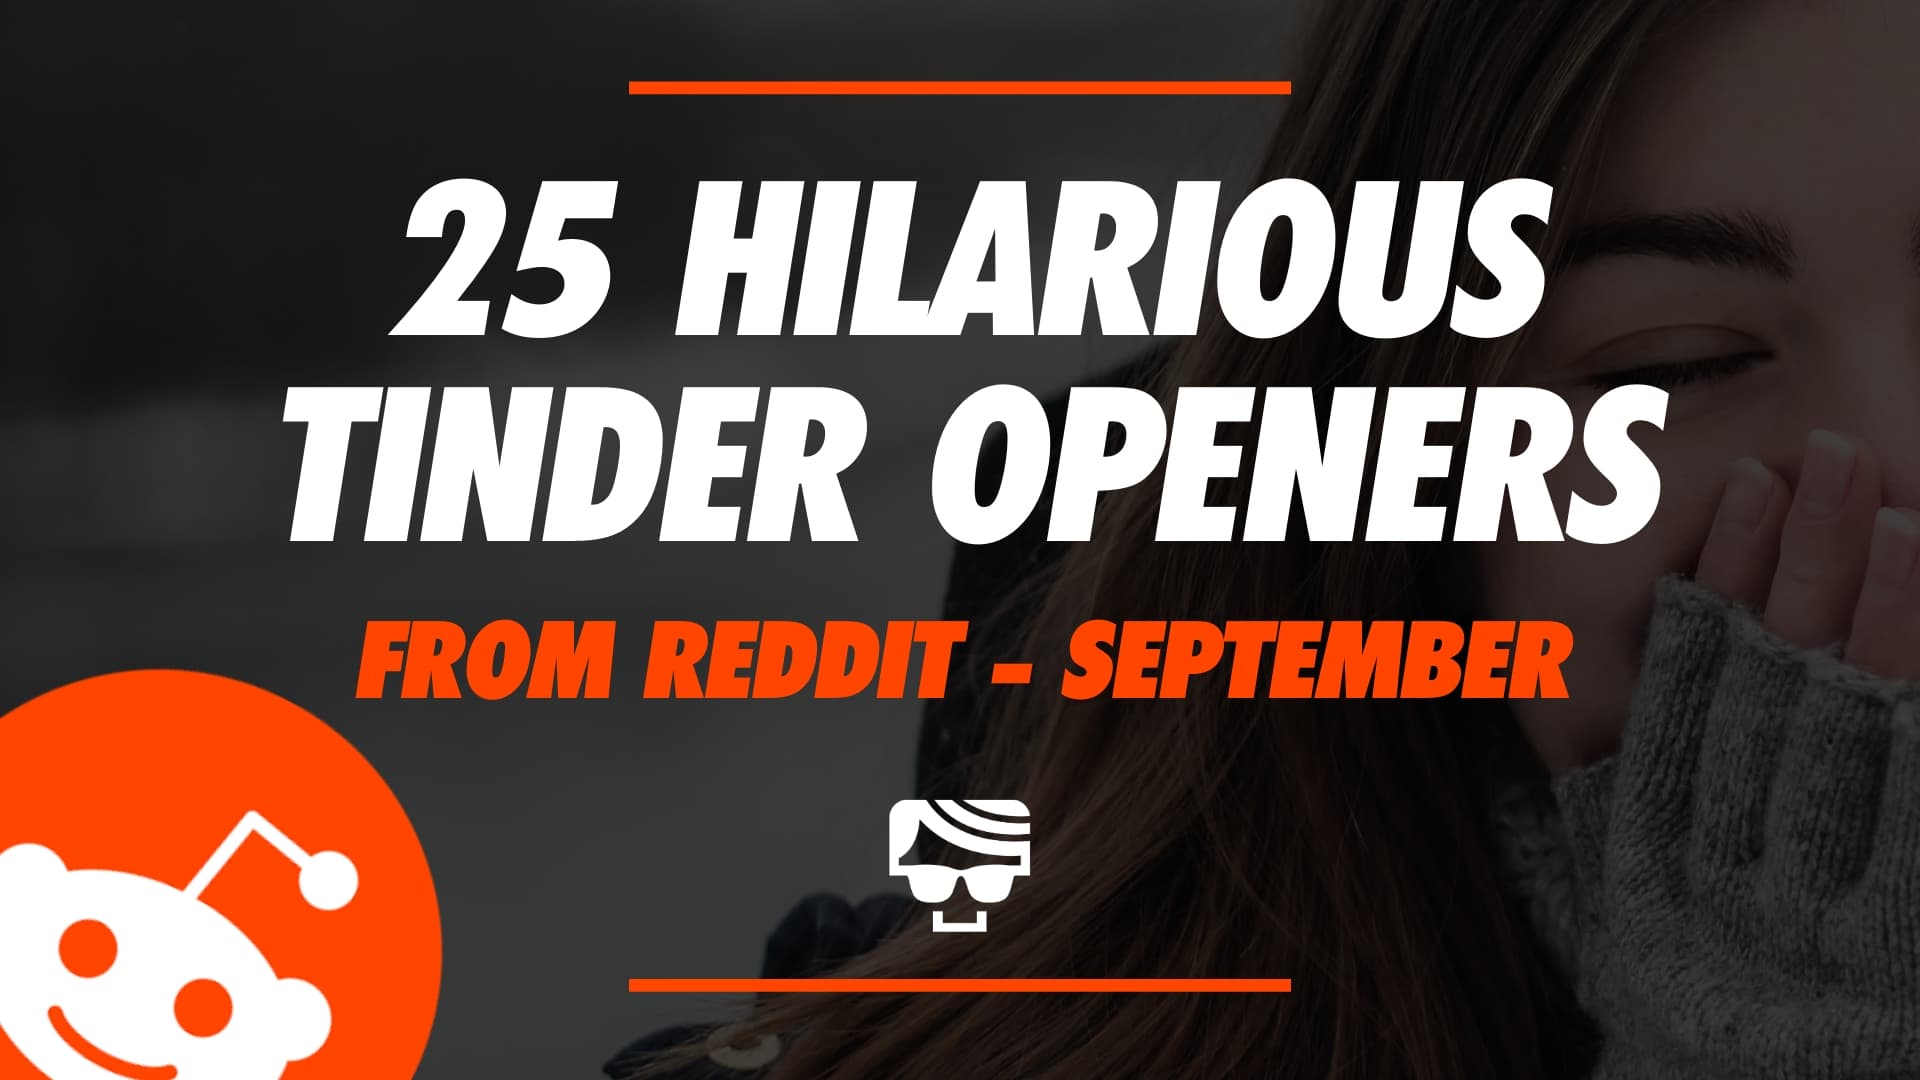 tinder openers from reddit - september